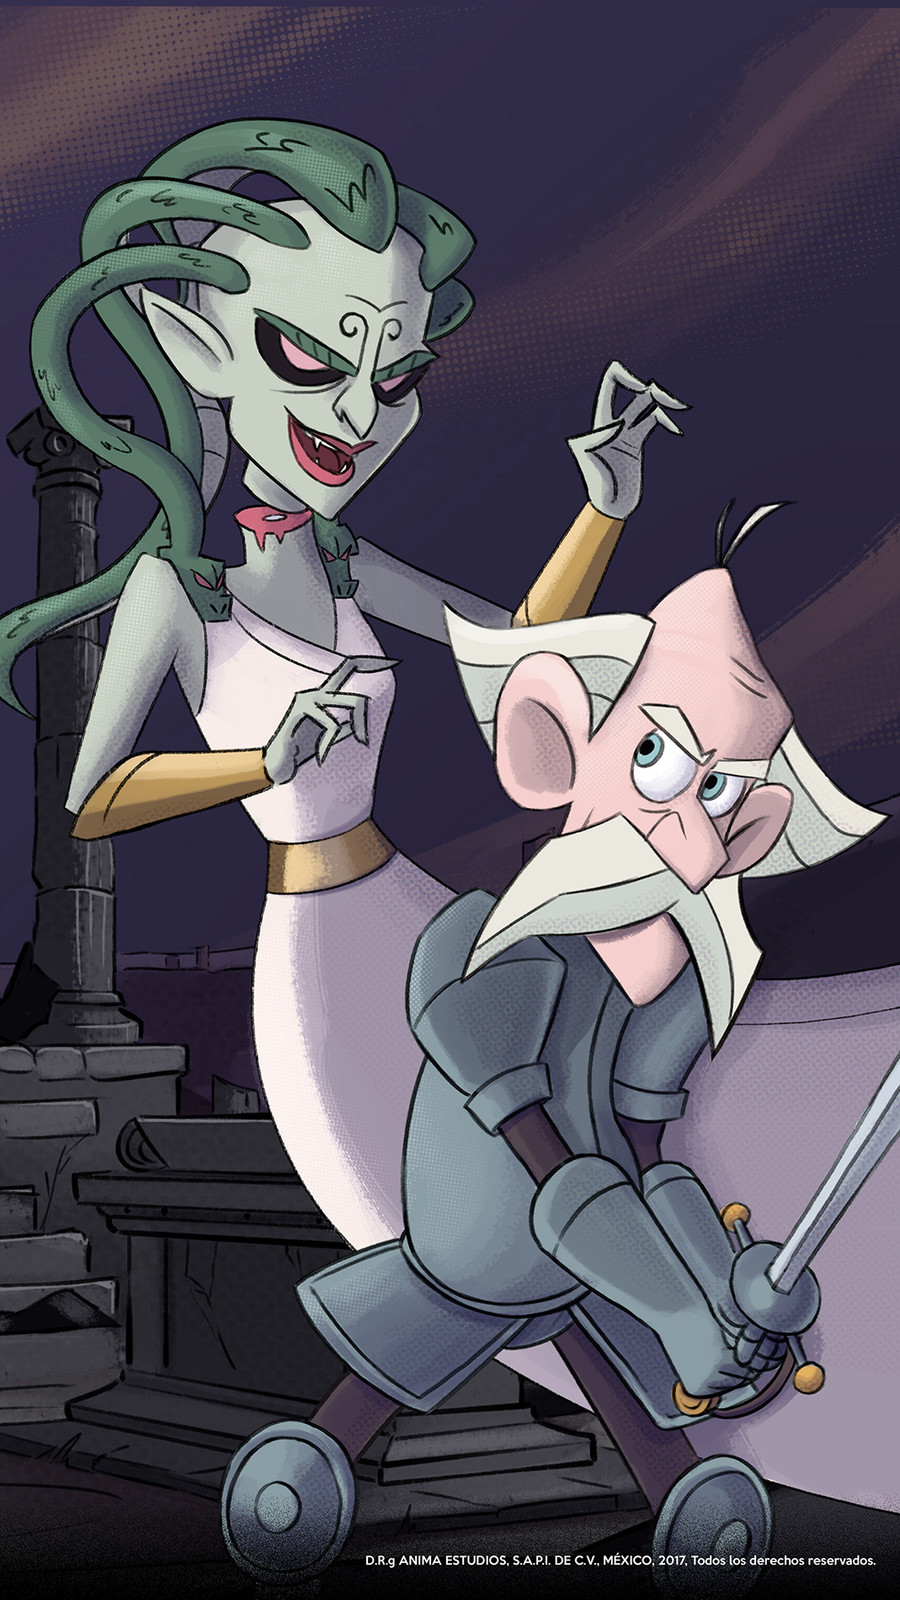 The poster art for episode 4: Ghost of Medusa